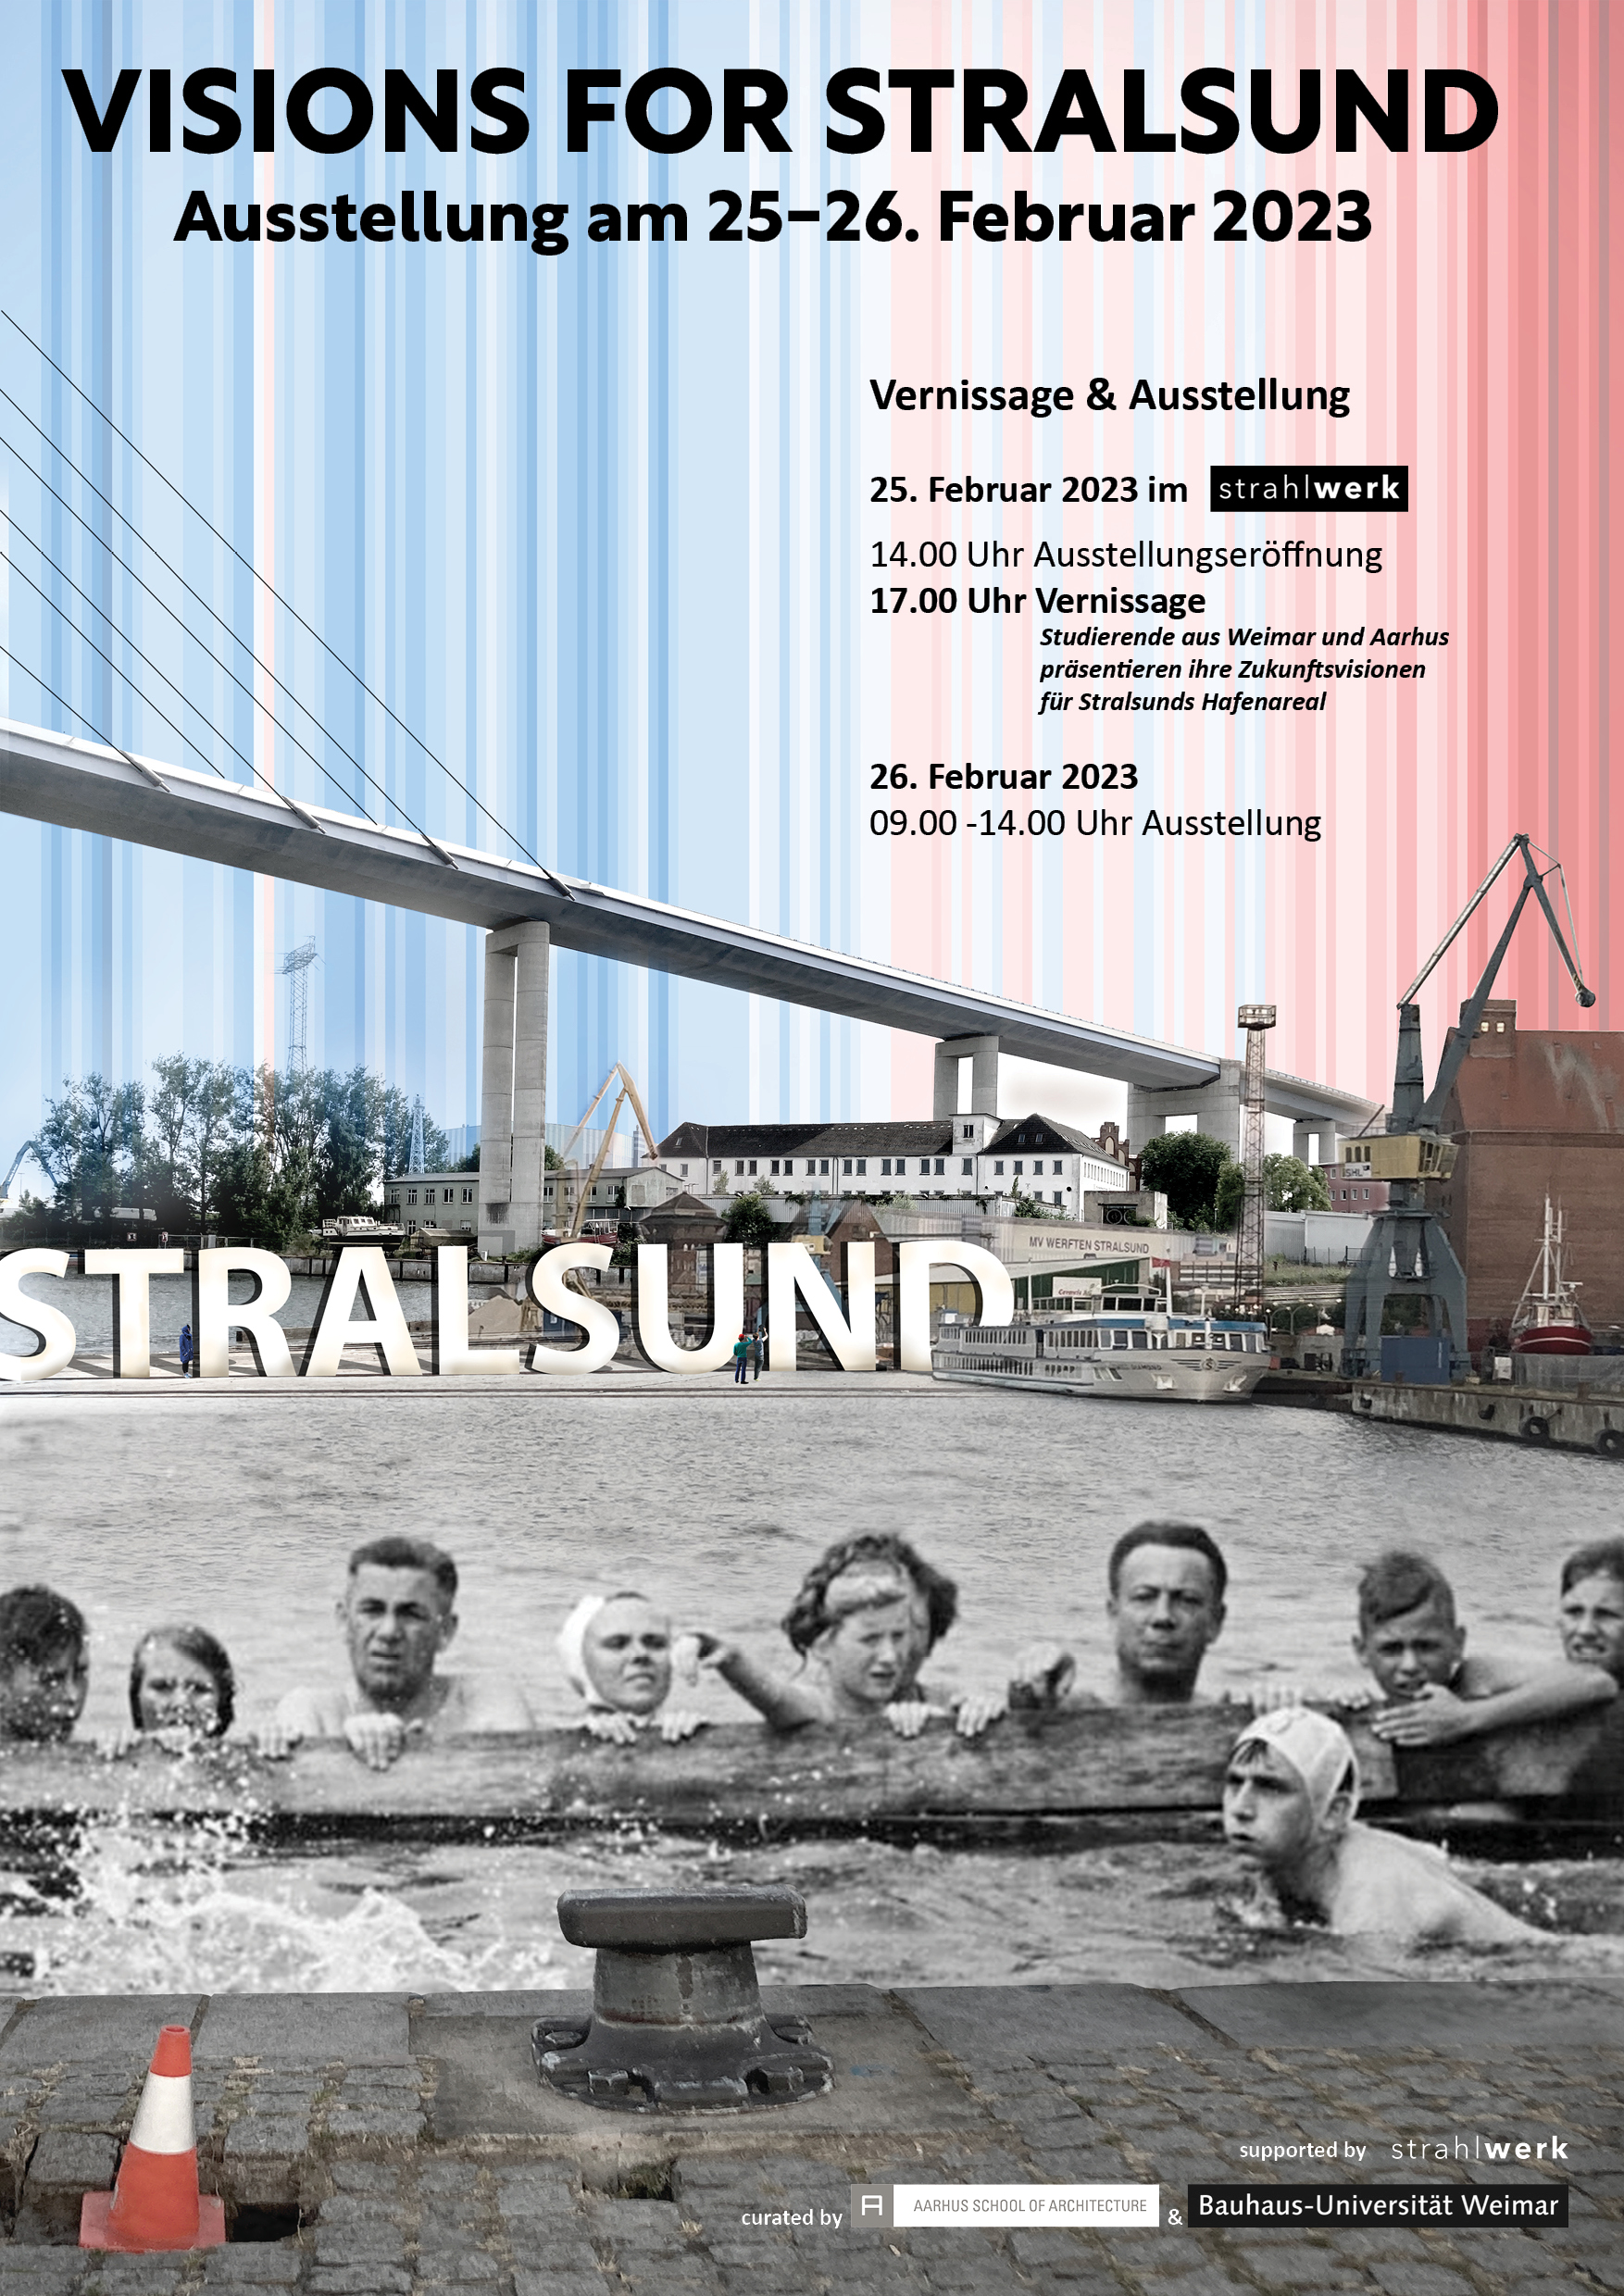 Visions for Stralsund